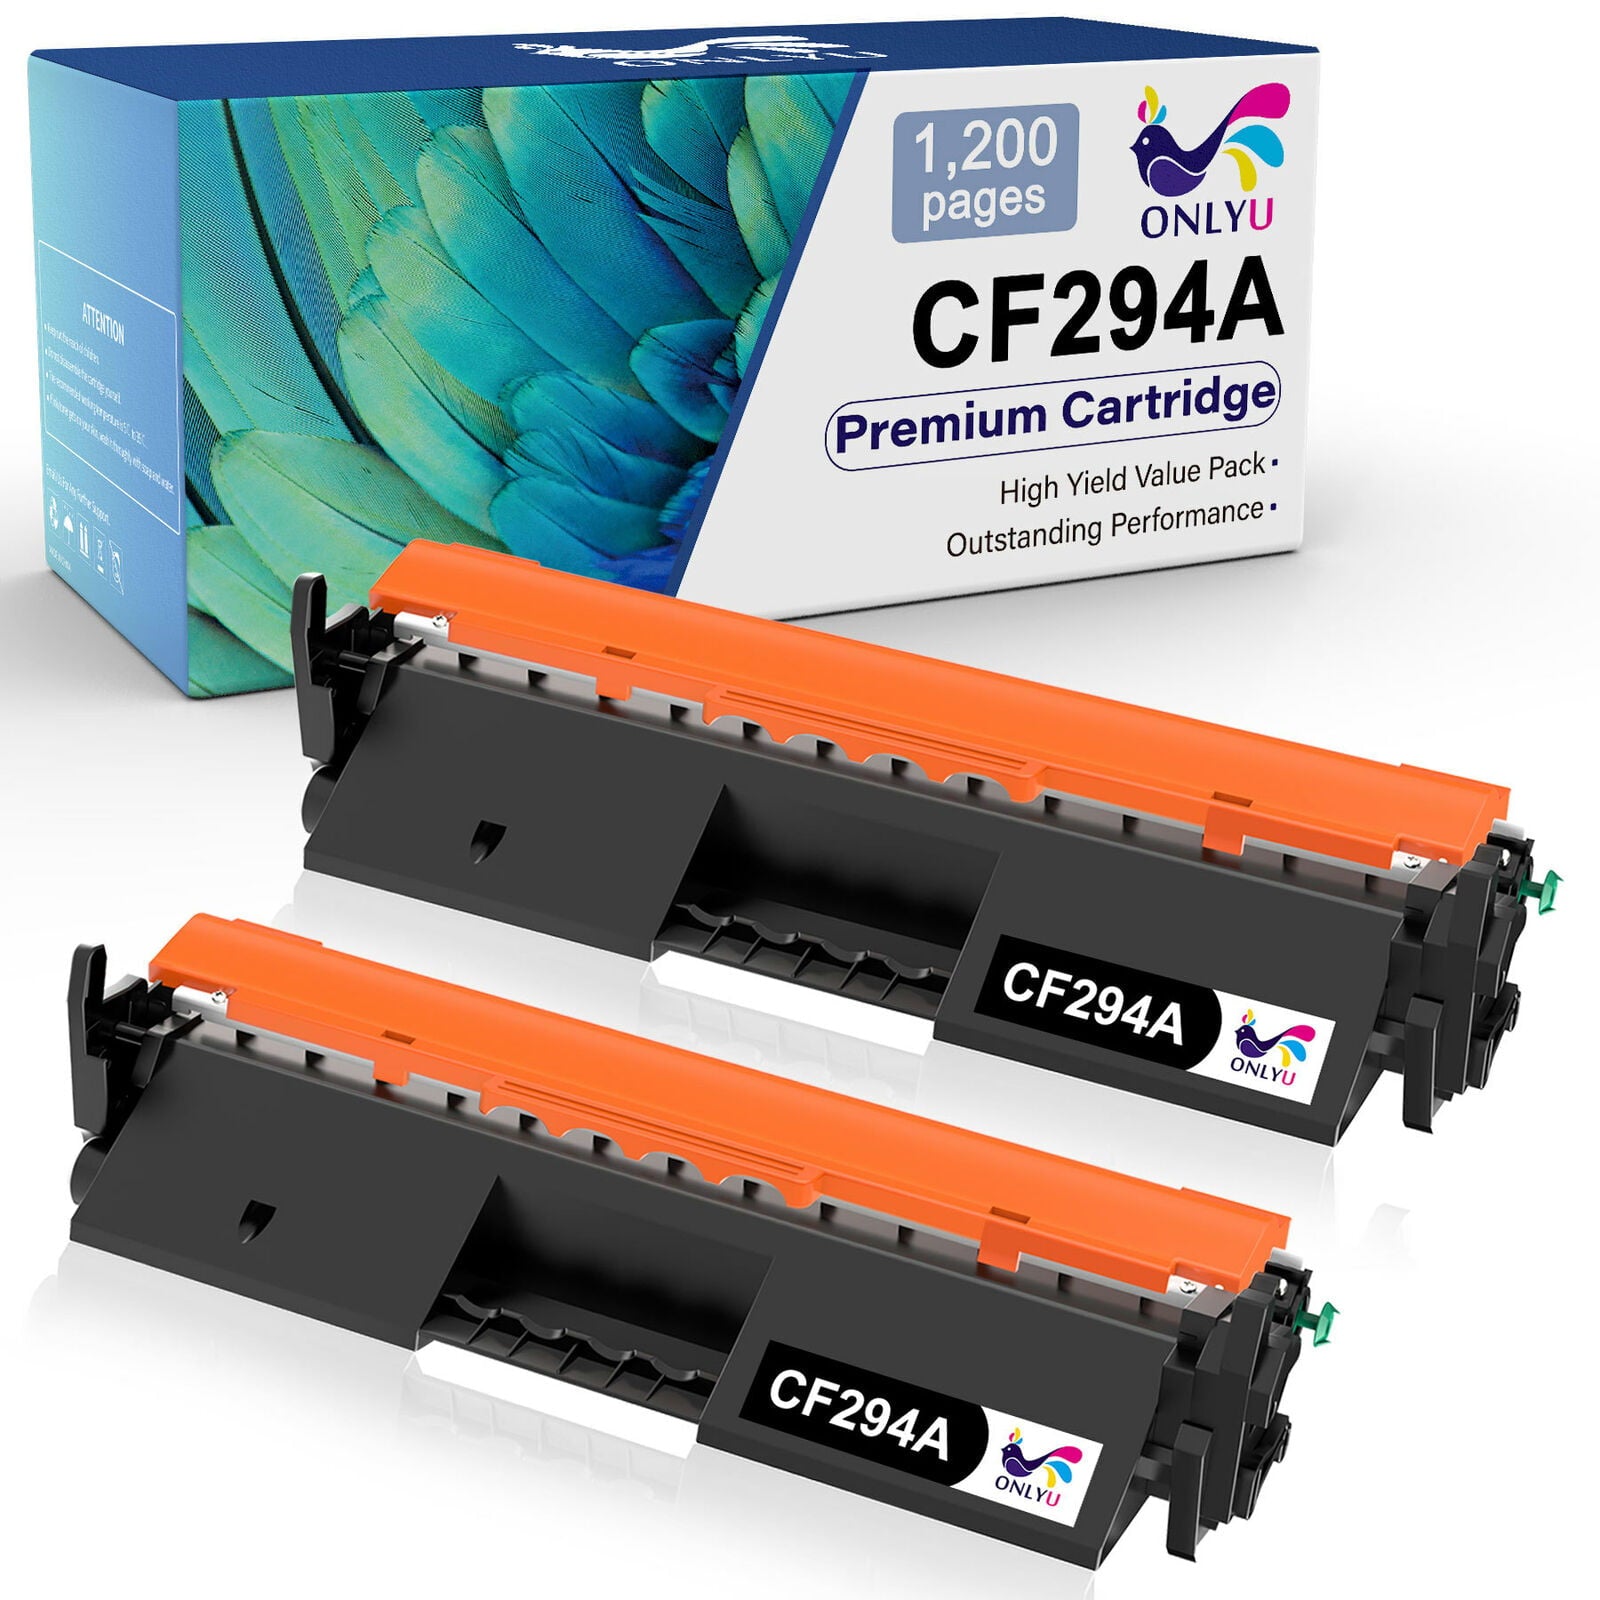 94A Black Toner Cartridge CF294A Toner Replacement for HP Printer, 2 Black